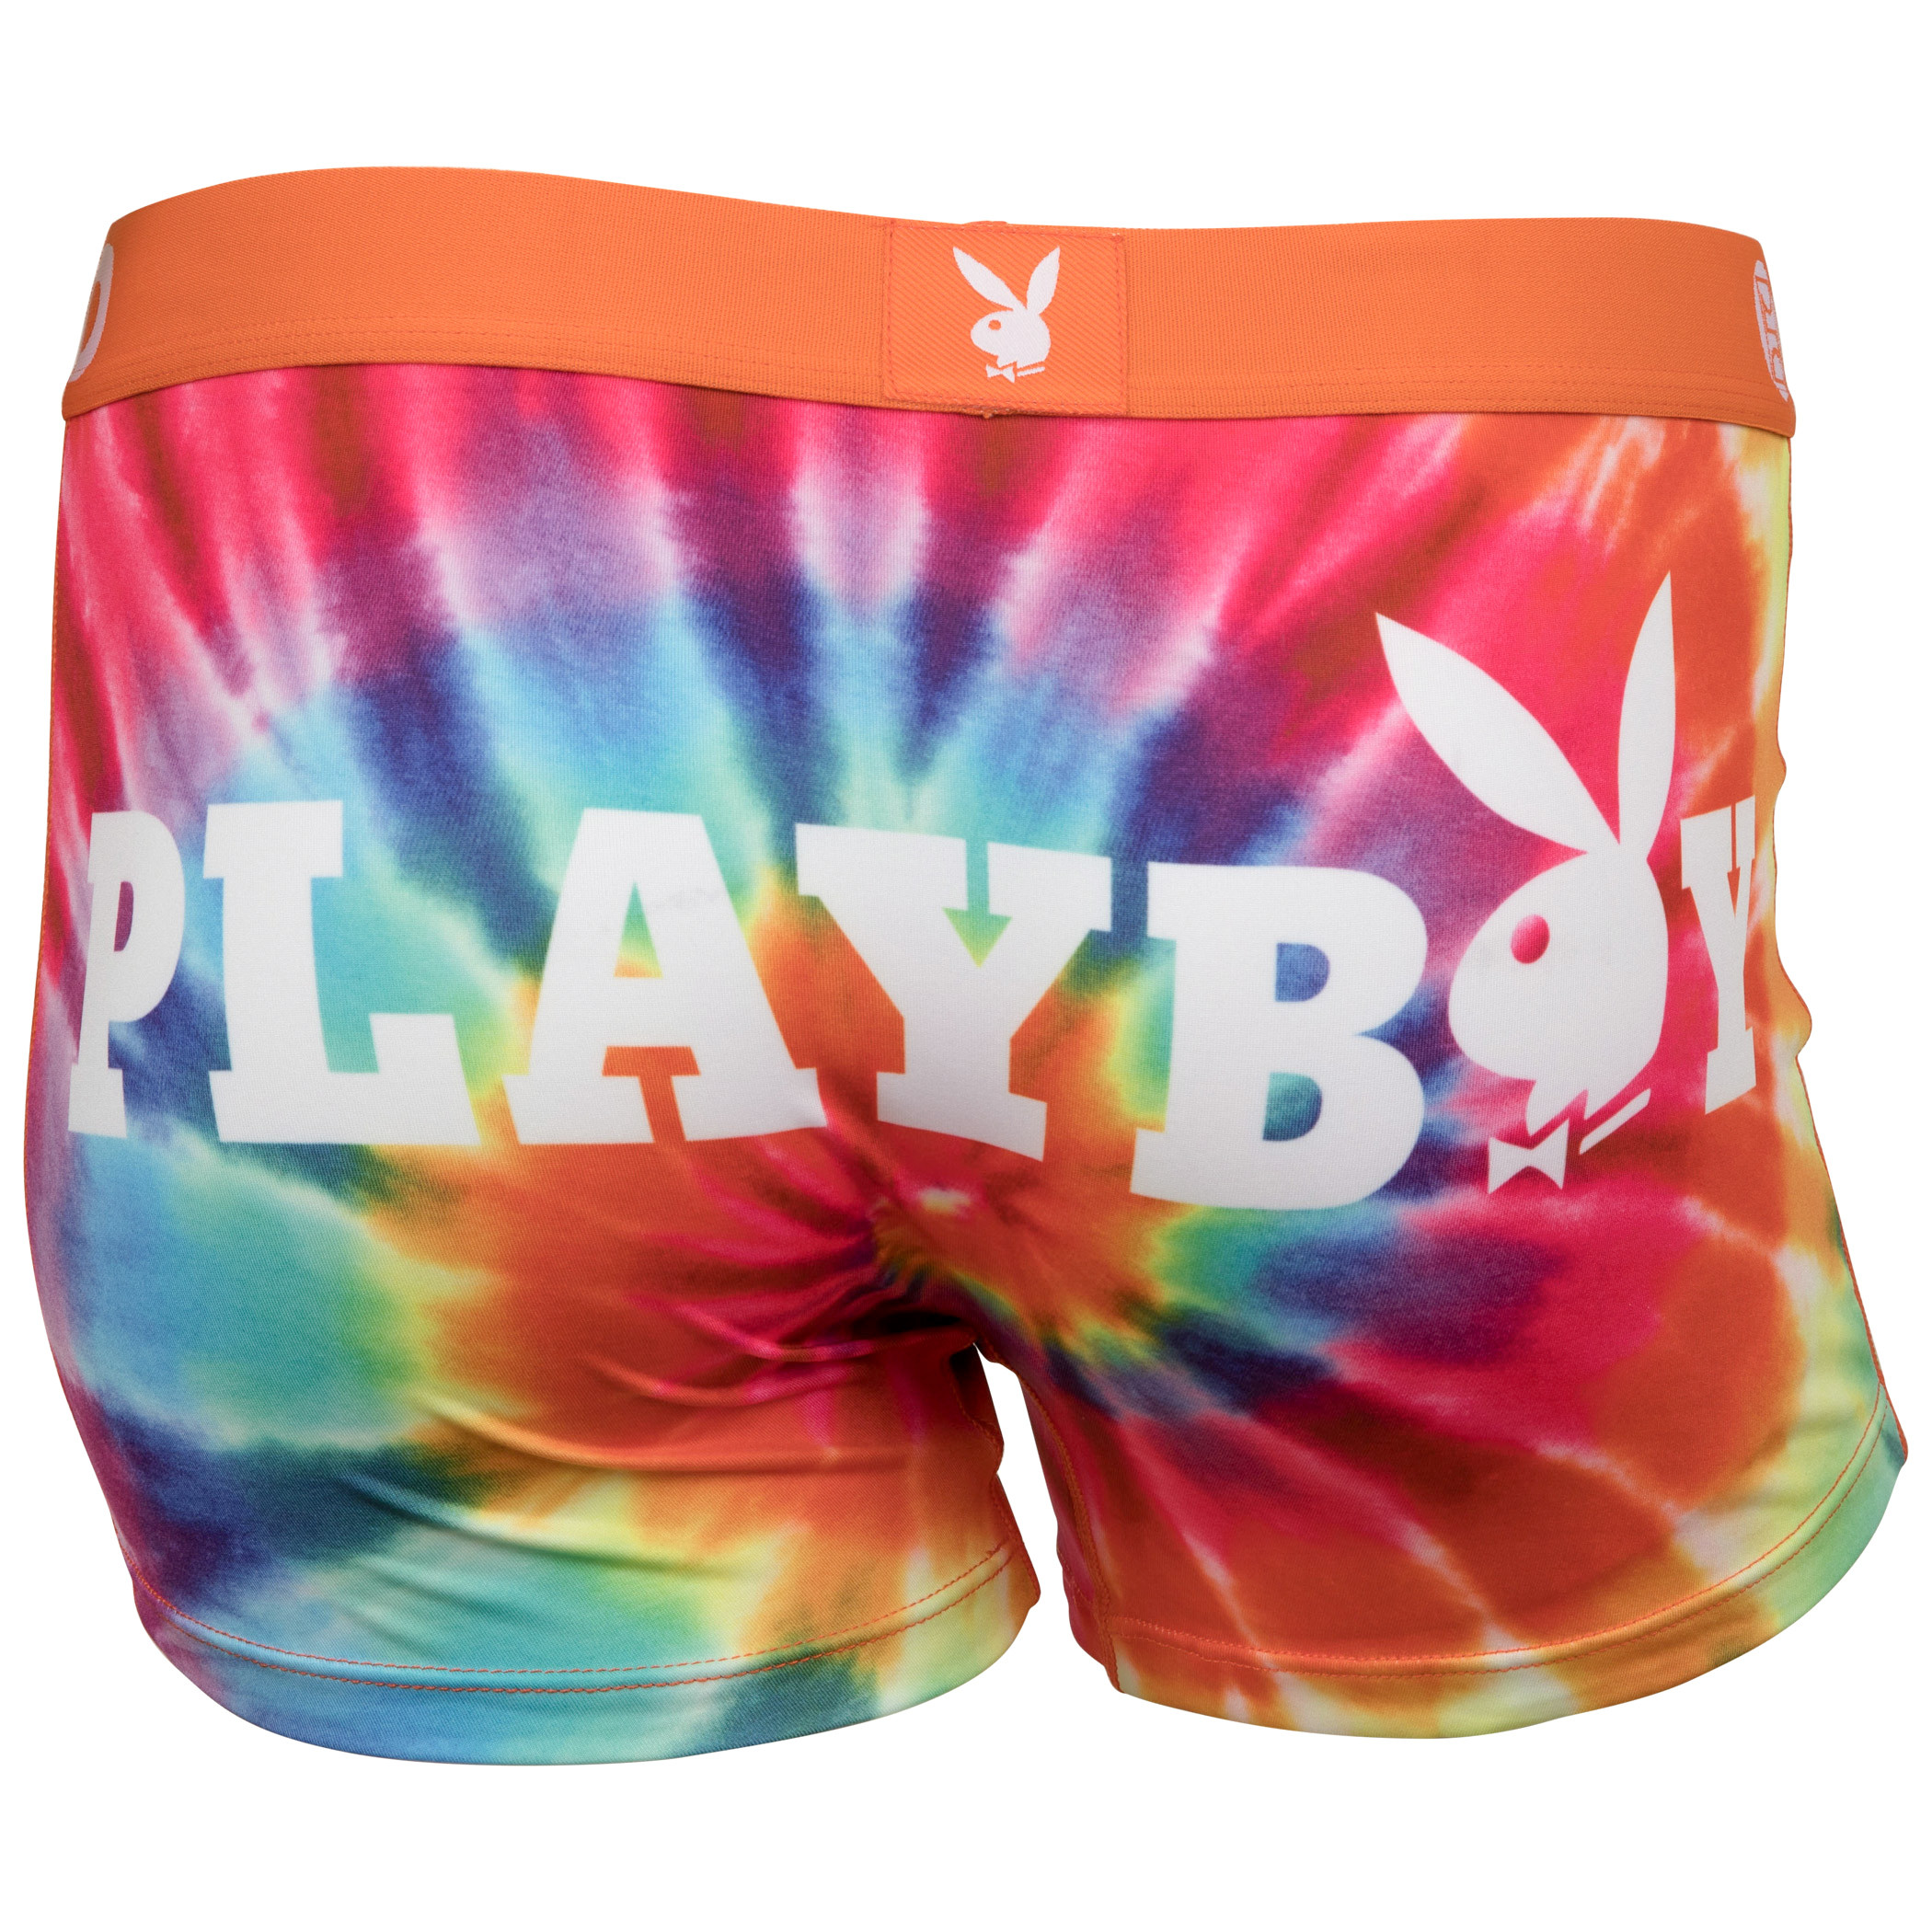 Playboy Classic Tie-Dye Rainbow PSD Boy Shorts Underwear